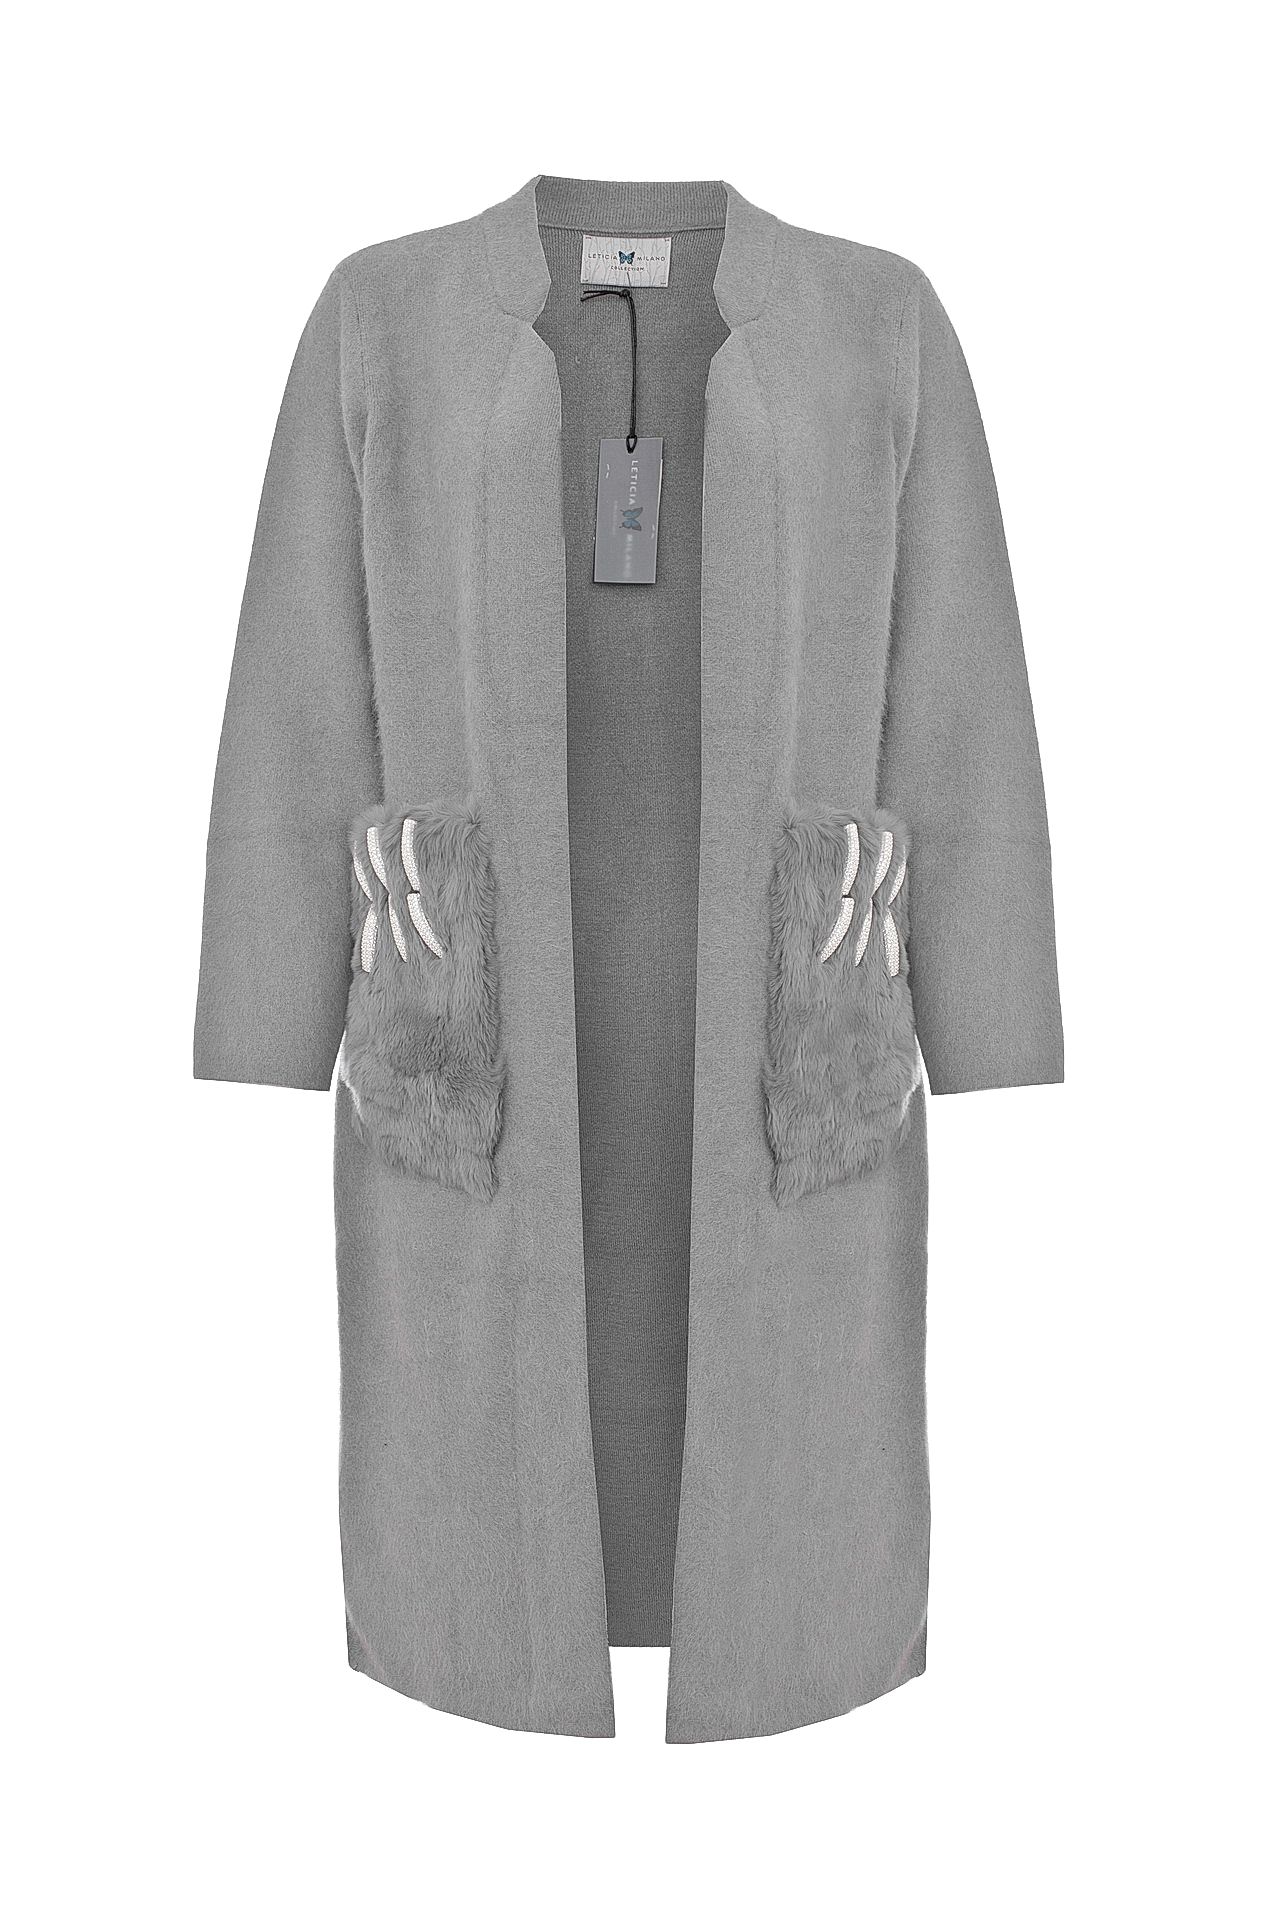 Одежда женская Кардиган LETICIA MILANO (SL8809T61/17.2). Купить за 14900 руб.